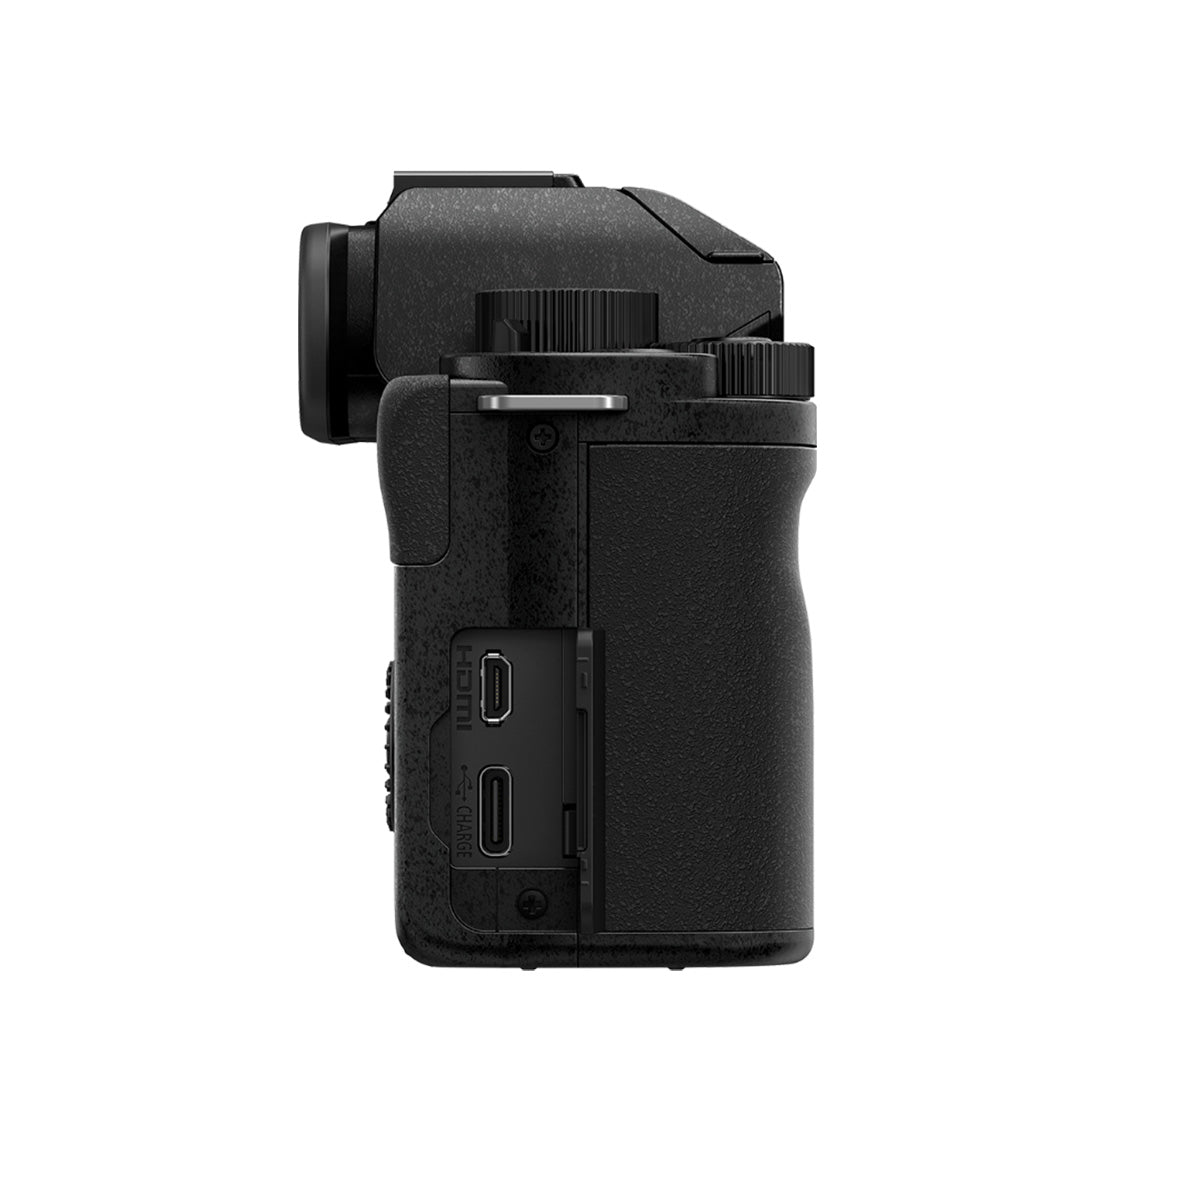 Panasonic Lumix DC-G100D Mirrorless Camera with 12-32mm Lens DC-G100DKEBK